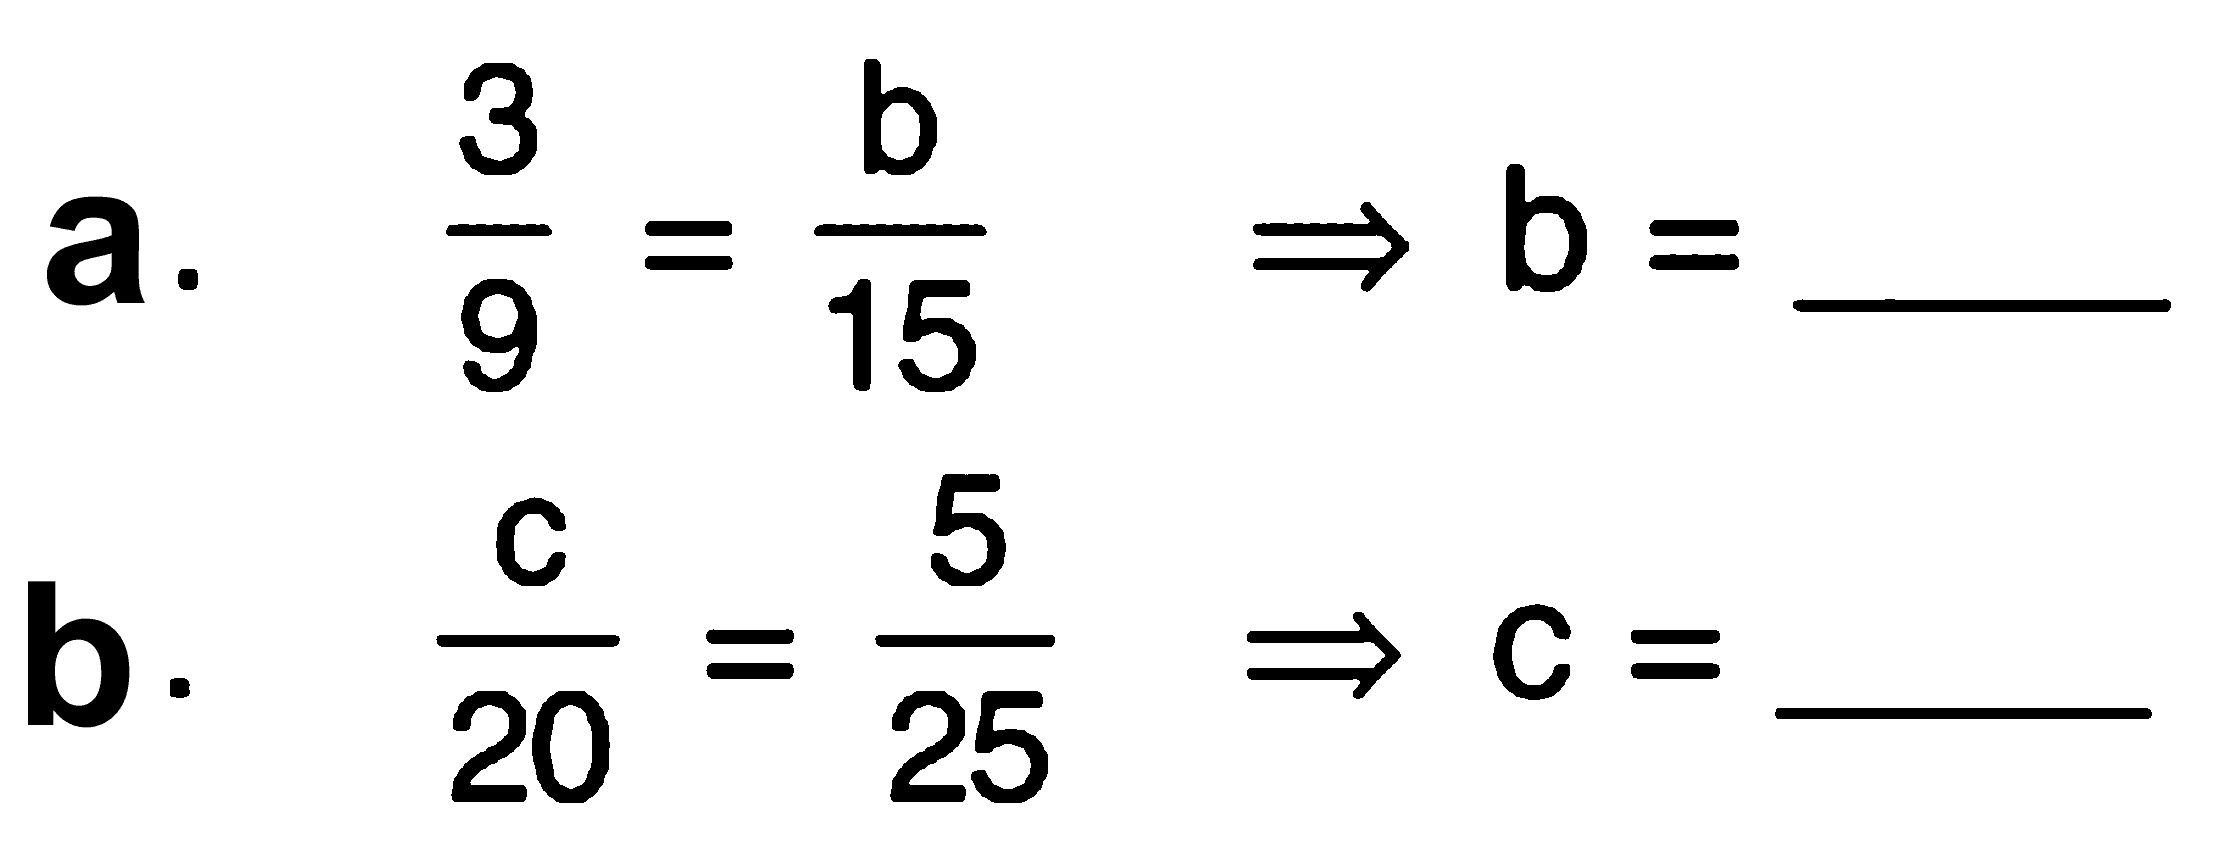 a. 3/9 = b/15 b =_____ b. c/20 = 5/25 c = ______